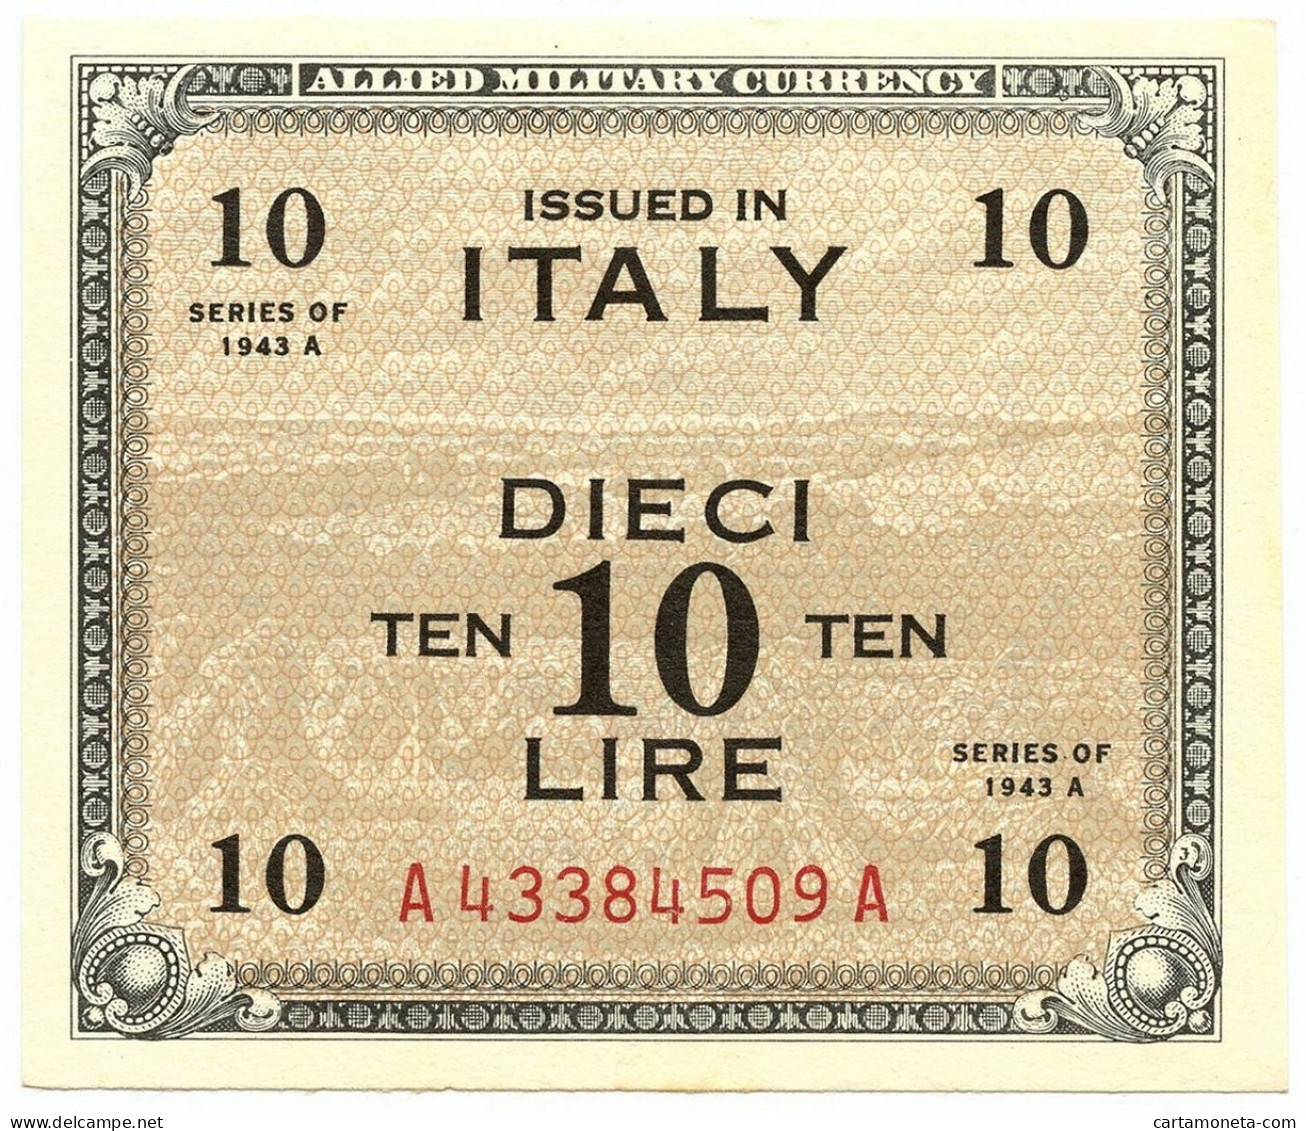 10 LIRE OCCUPAZIONE AMERICANA IN ITALIA BILINGUE FLC A-A 1943 A QFDS - Ocupación Aliados Segunda Guerra Mundial